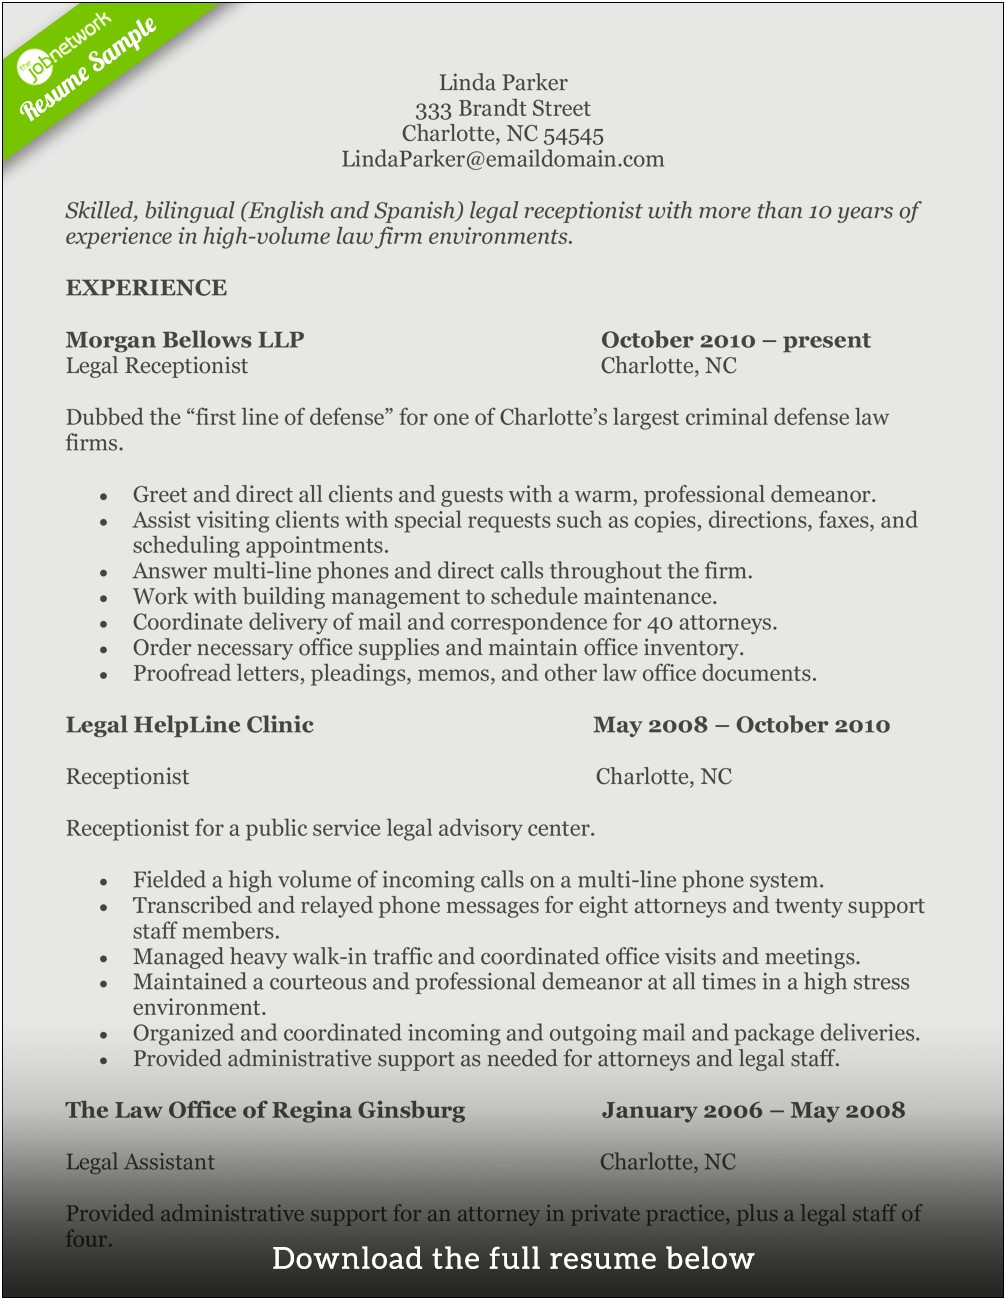 School Secretary Job Description For Resume